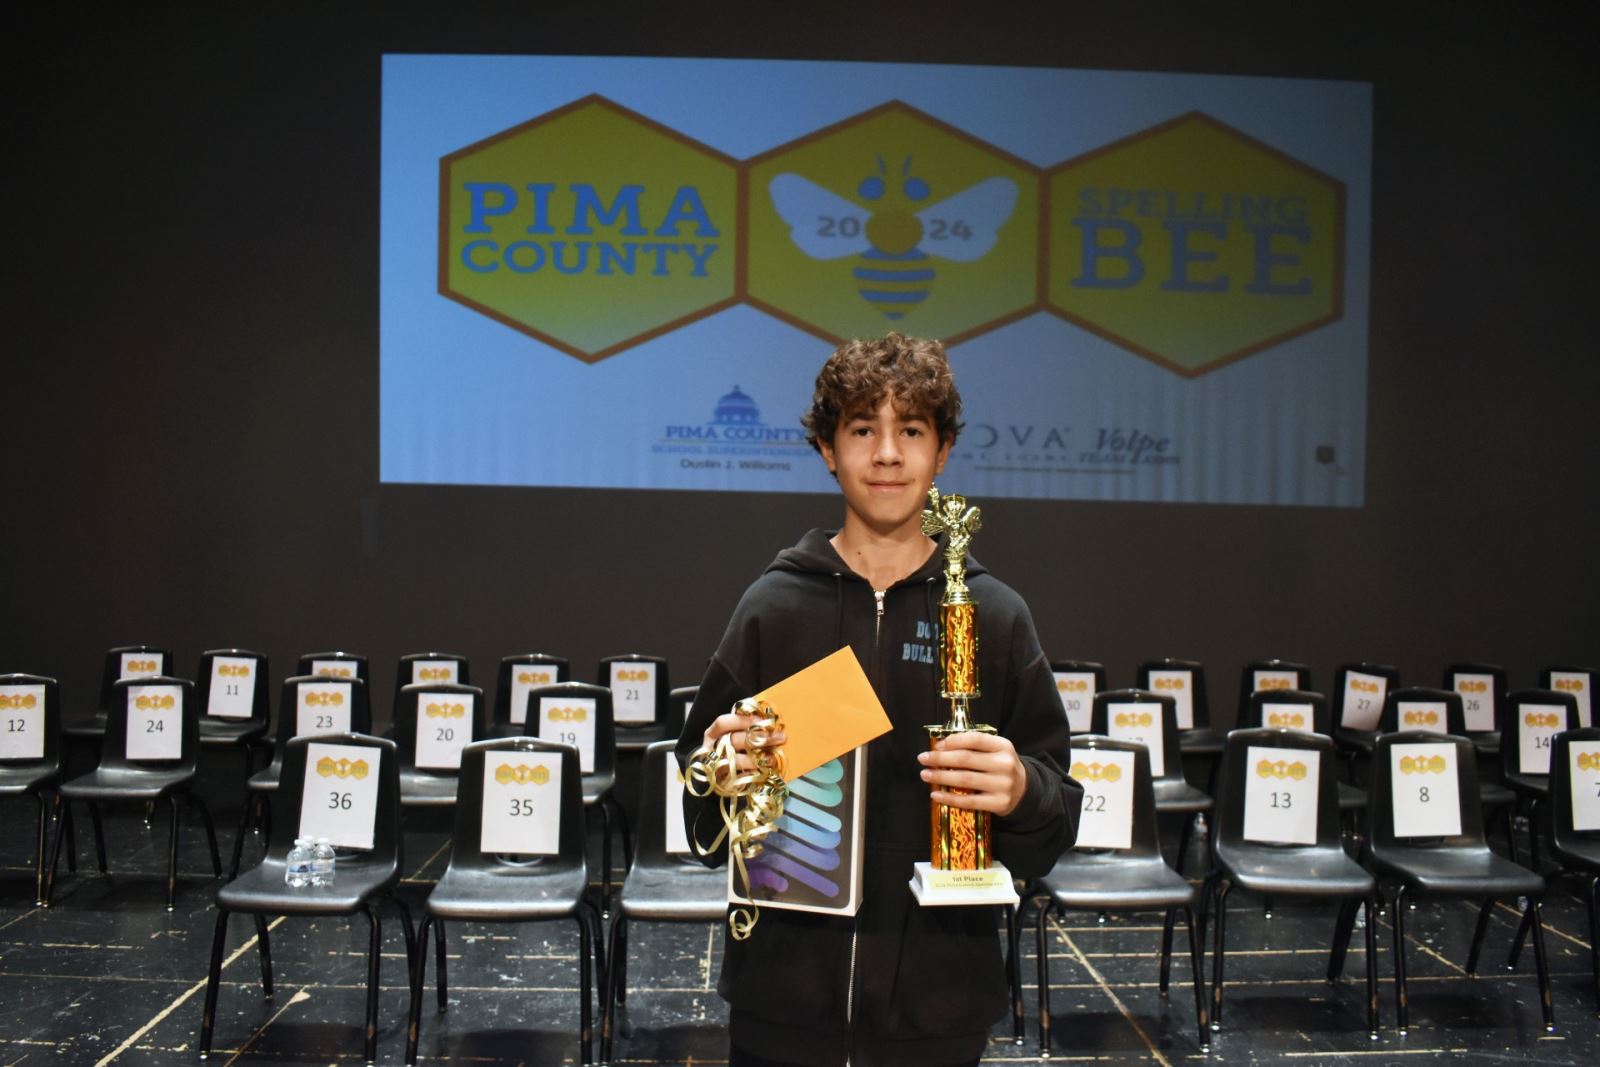 Spelling bee champion Ricardo Cabrera